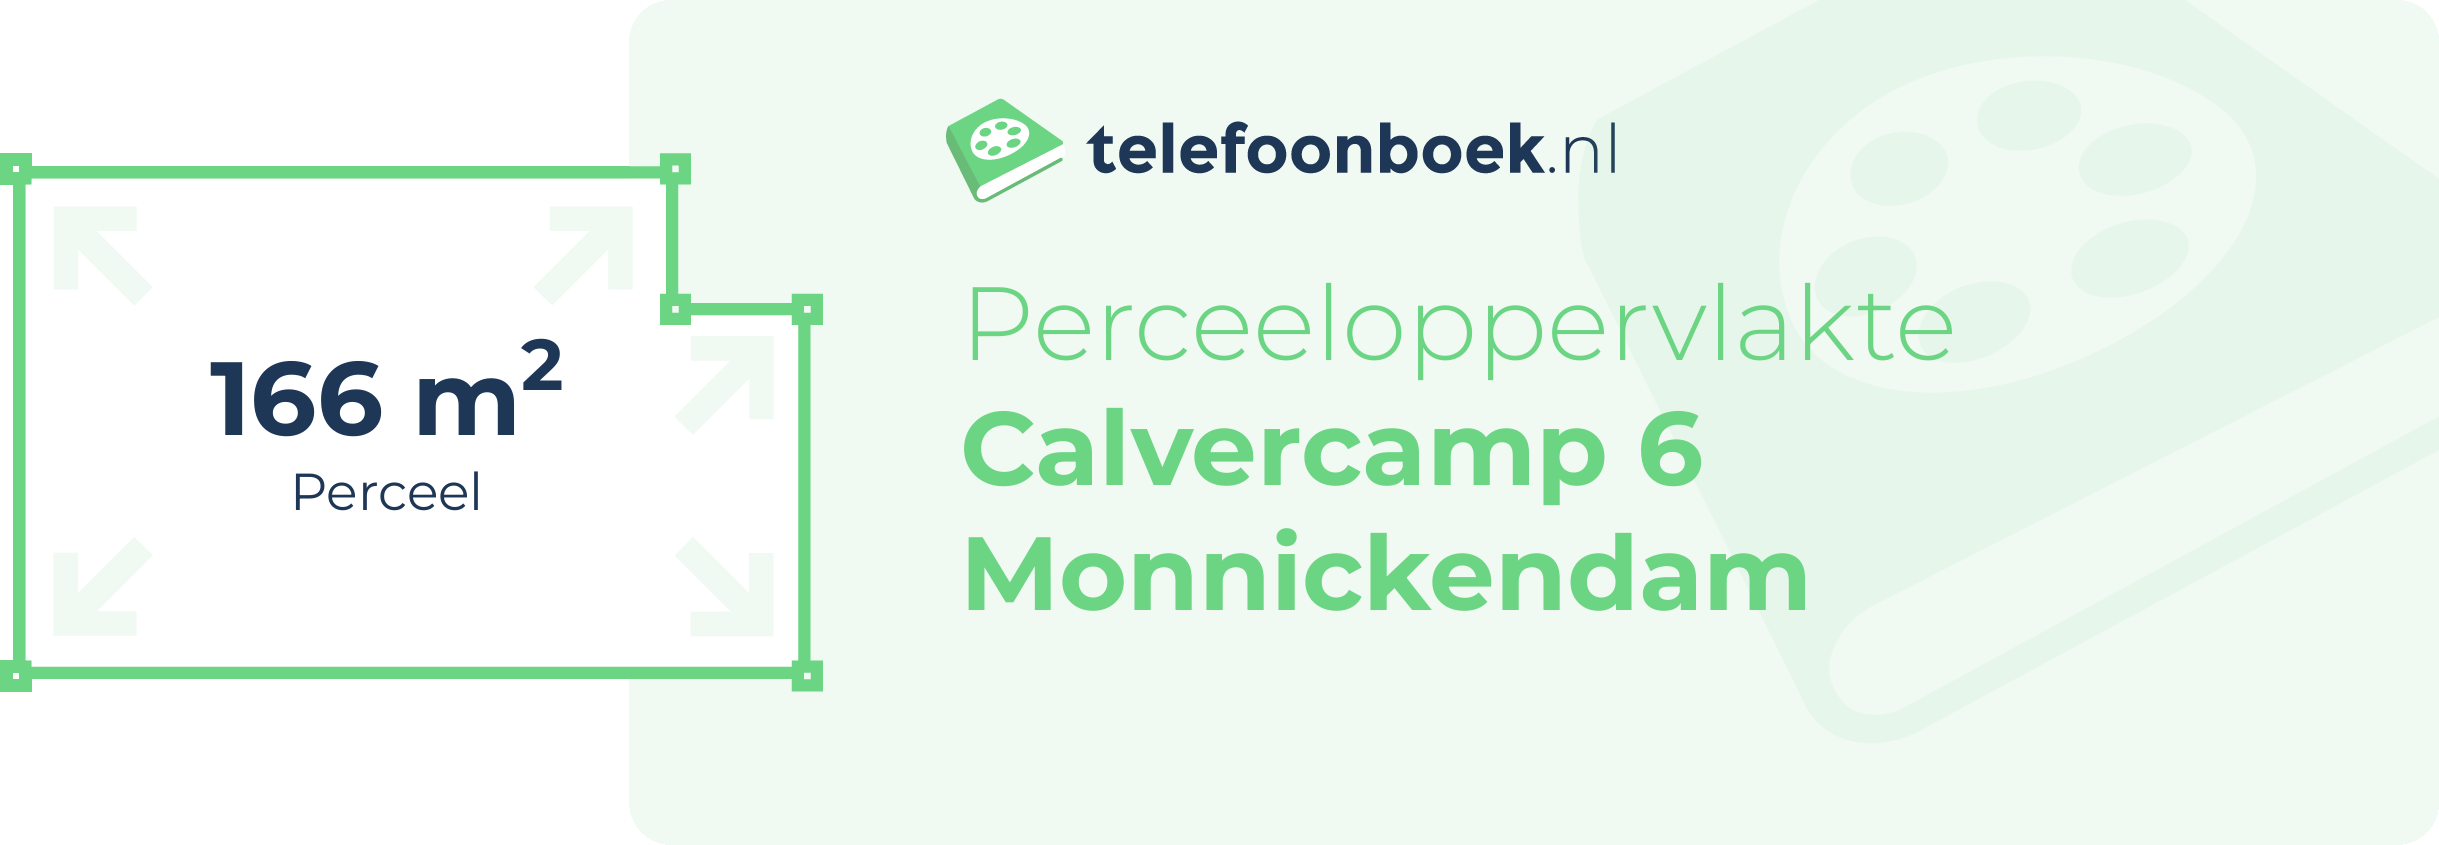 Perceeloppervlakte Calvercamp 6 Monnickendam